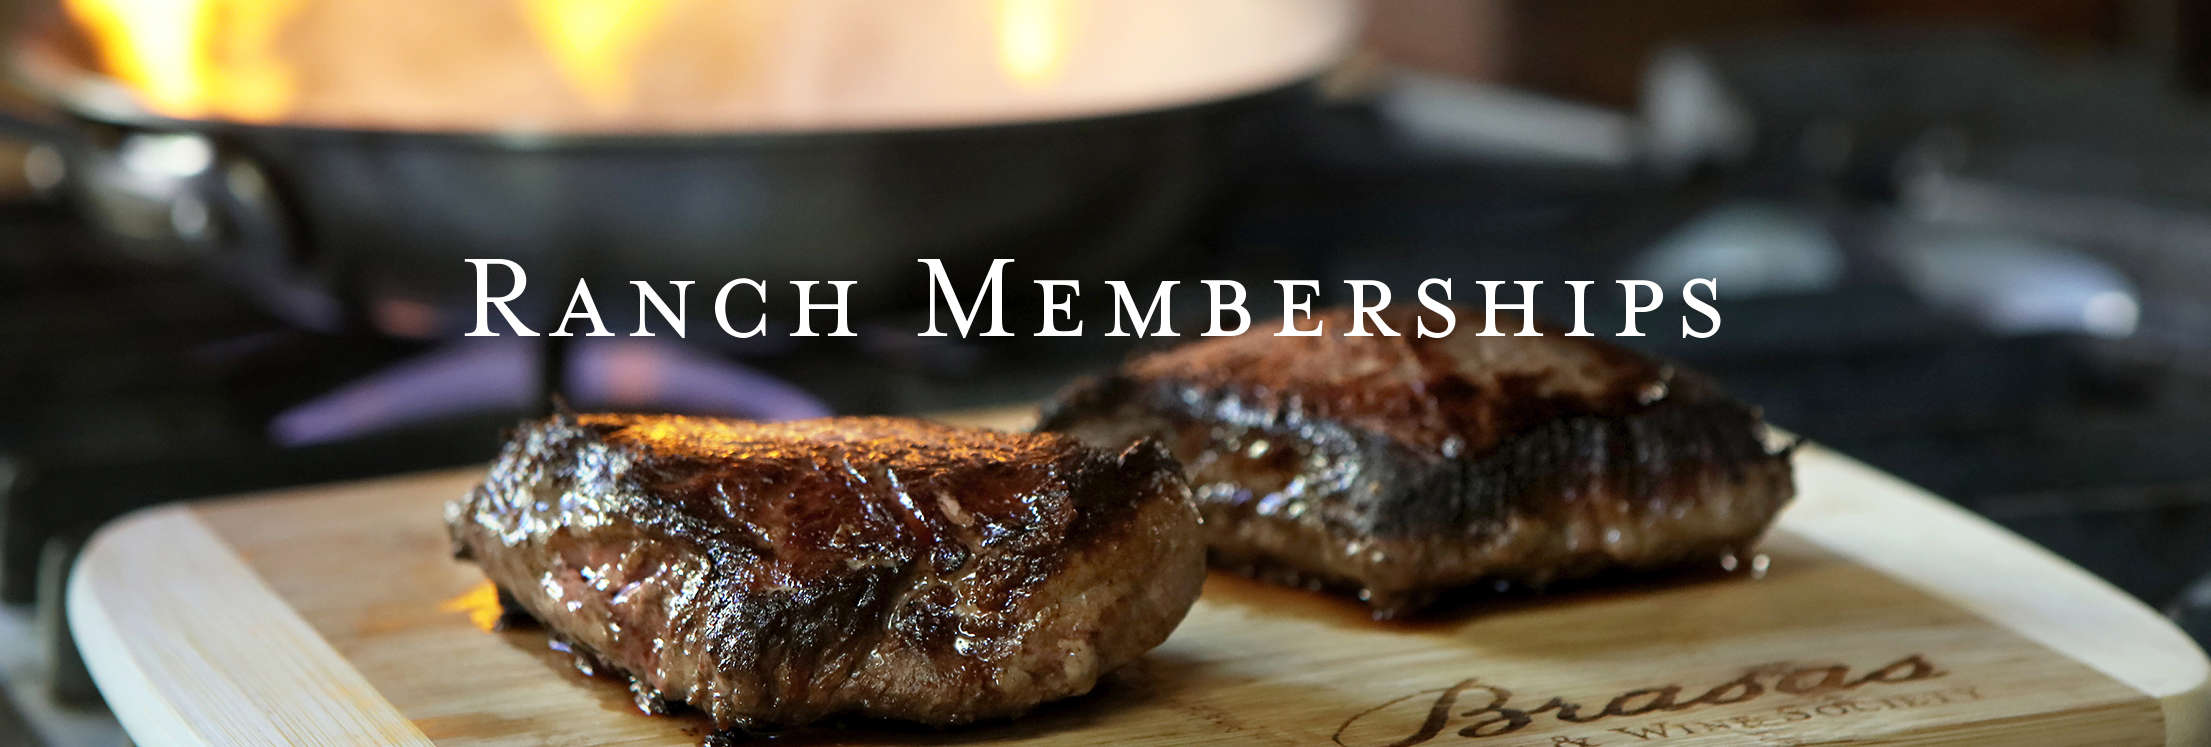 Ranch Memberships